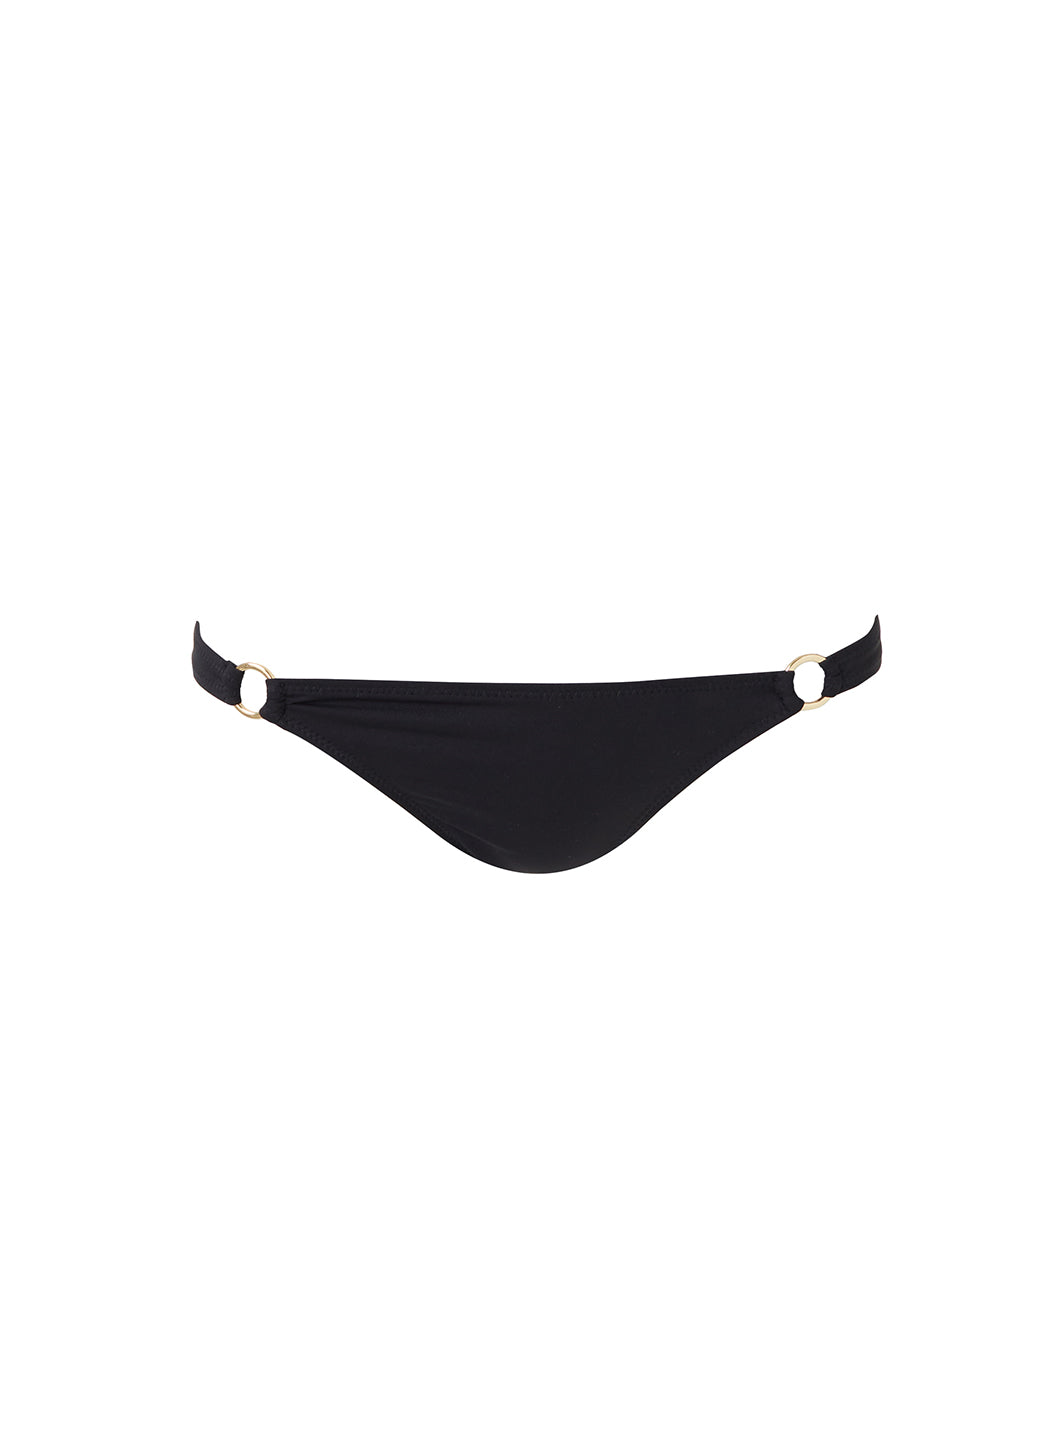 caracas-black-bikini-bottom_cutout